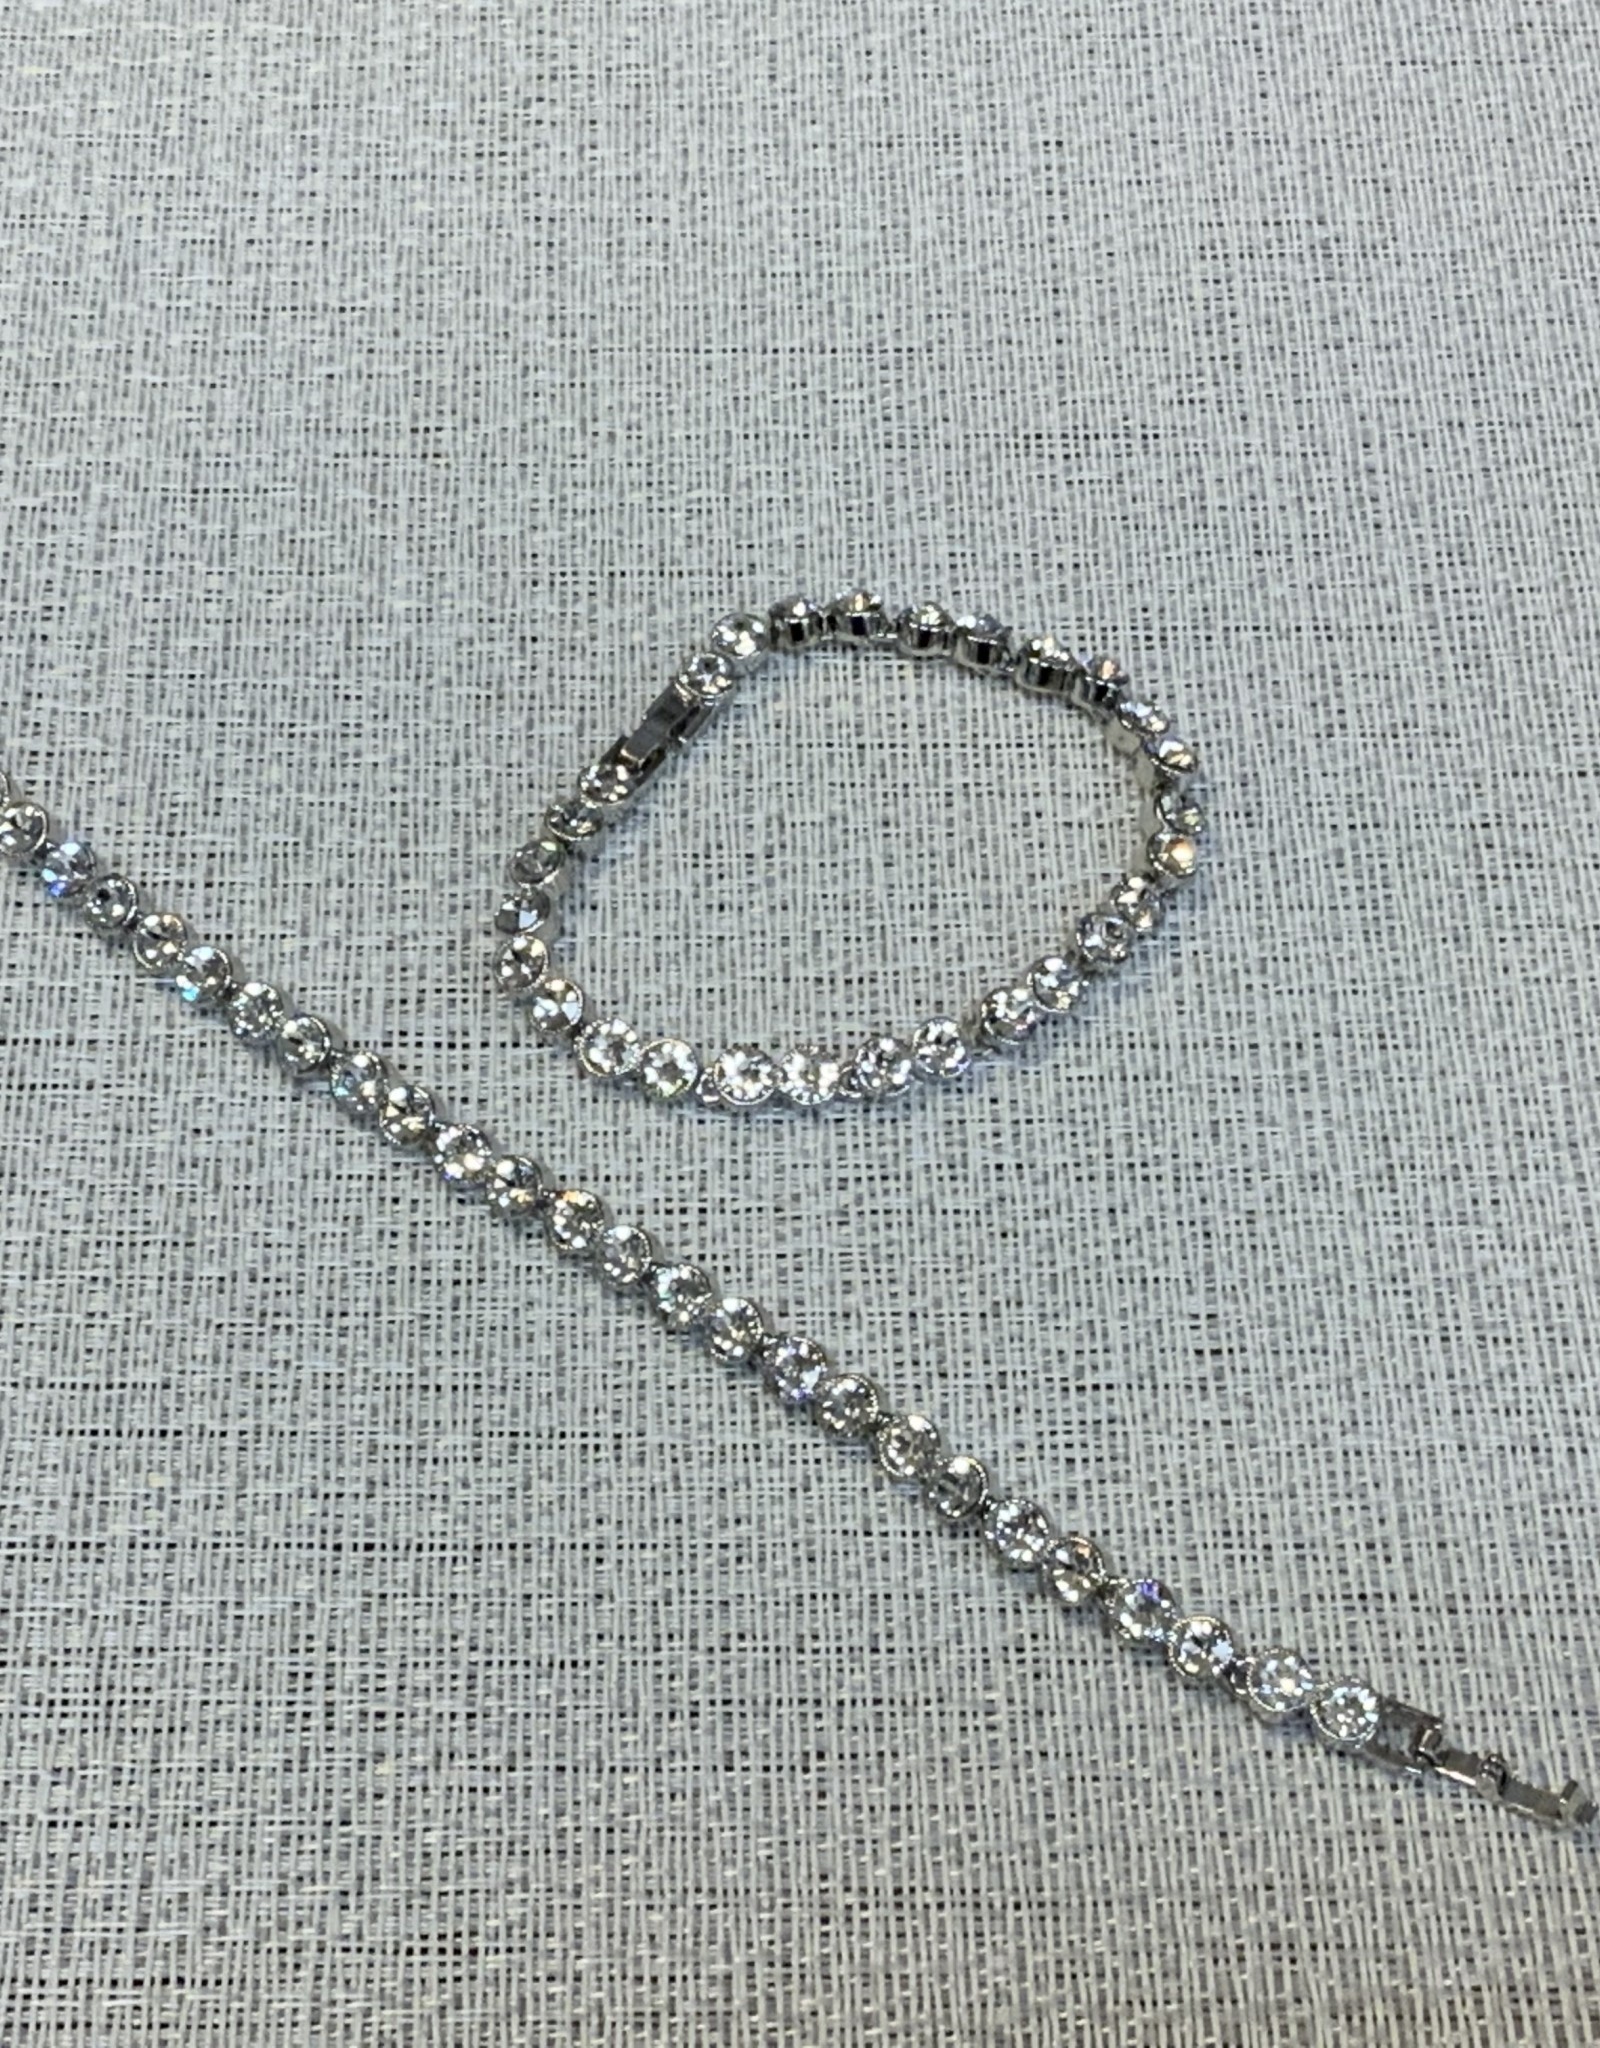 Swarovski Crystal Silver Tennis Bracelet - White